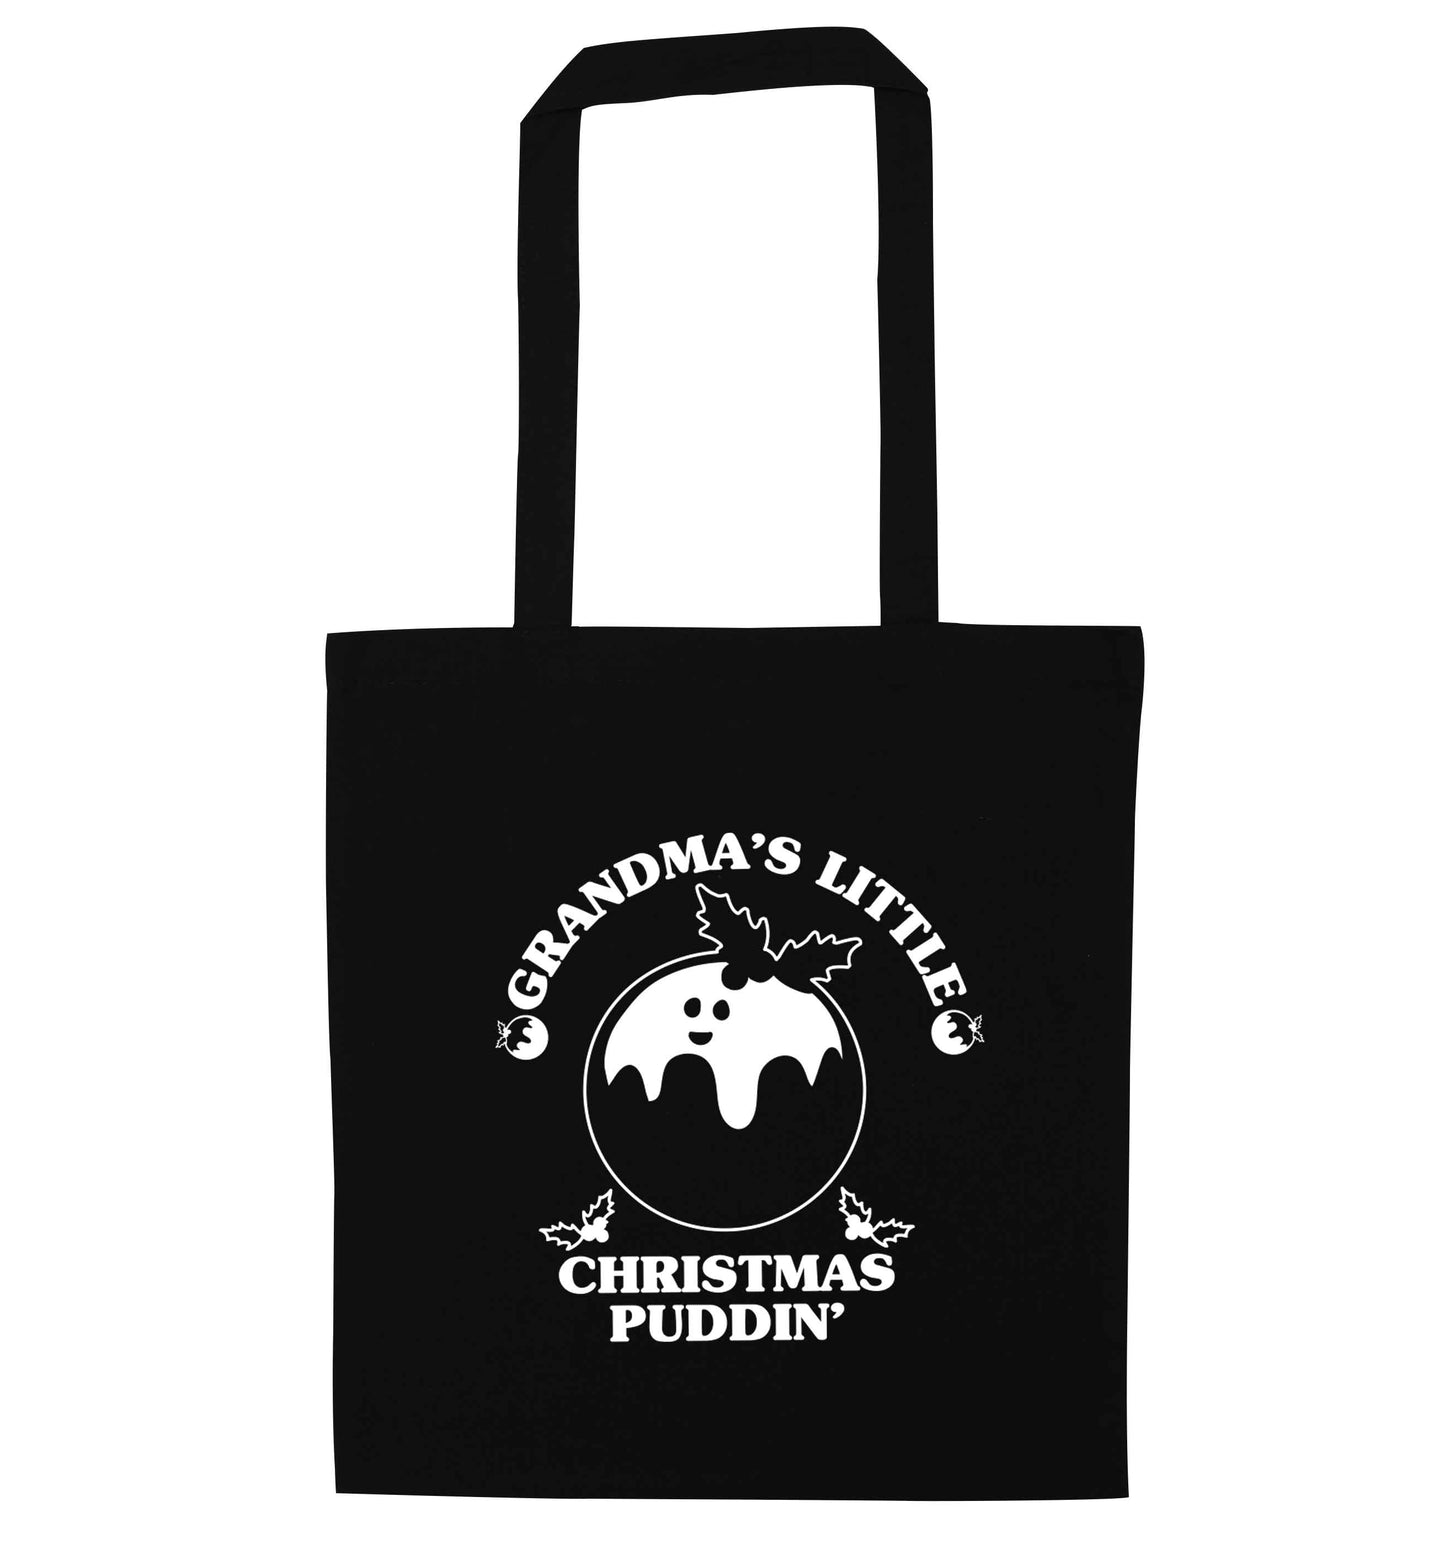 Grandma's little Christmas puddin' black tote bag